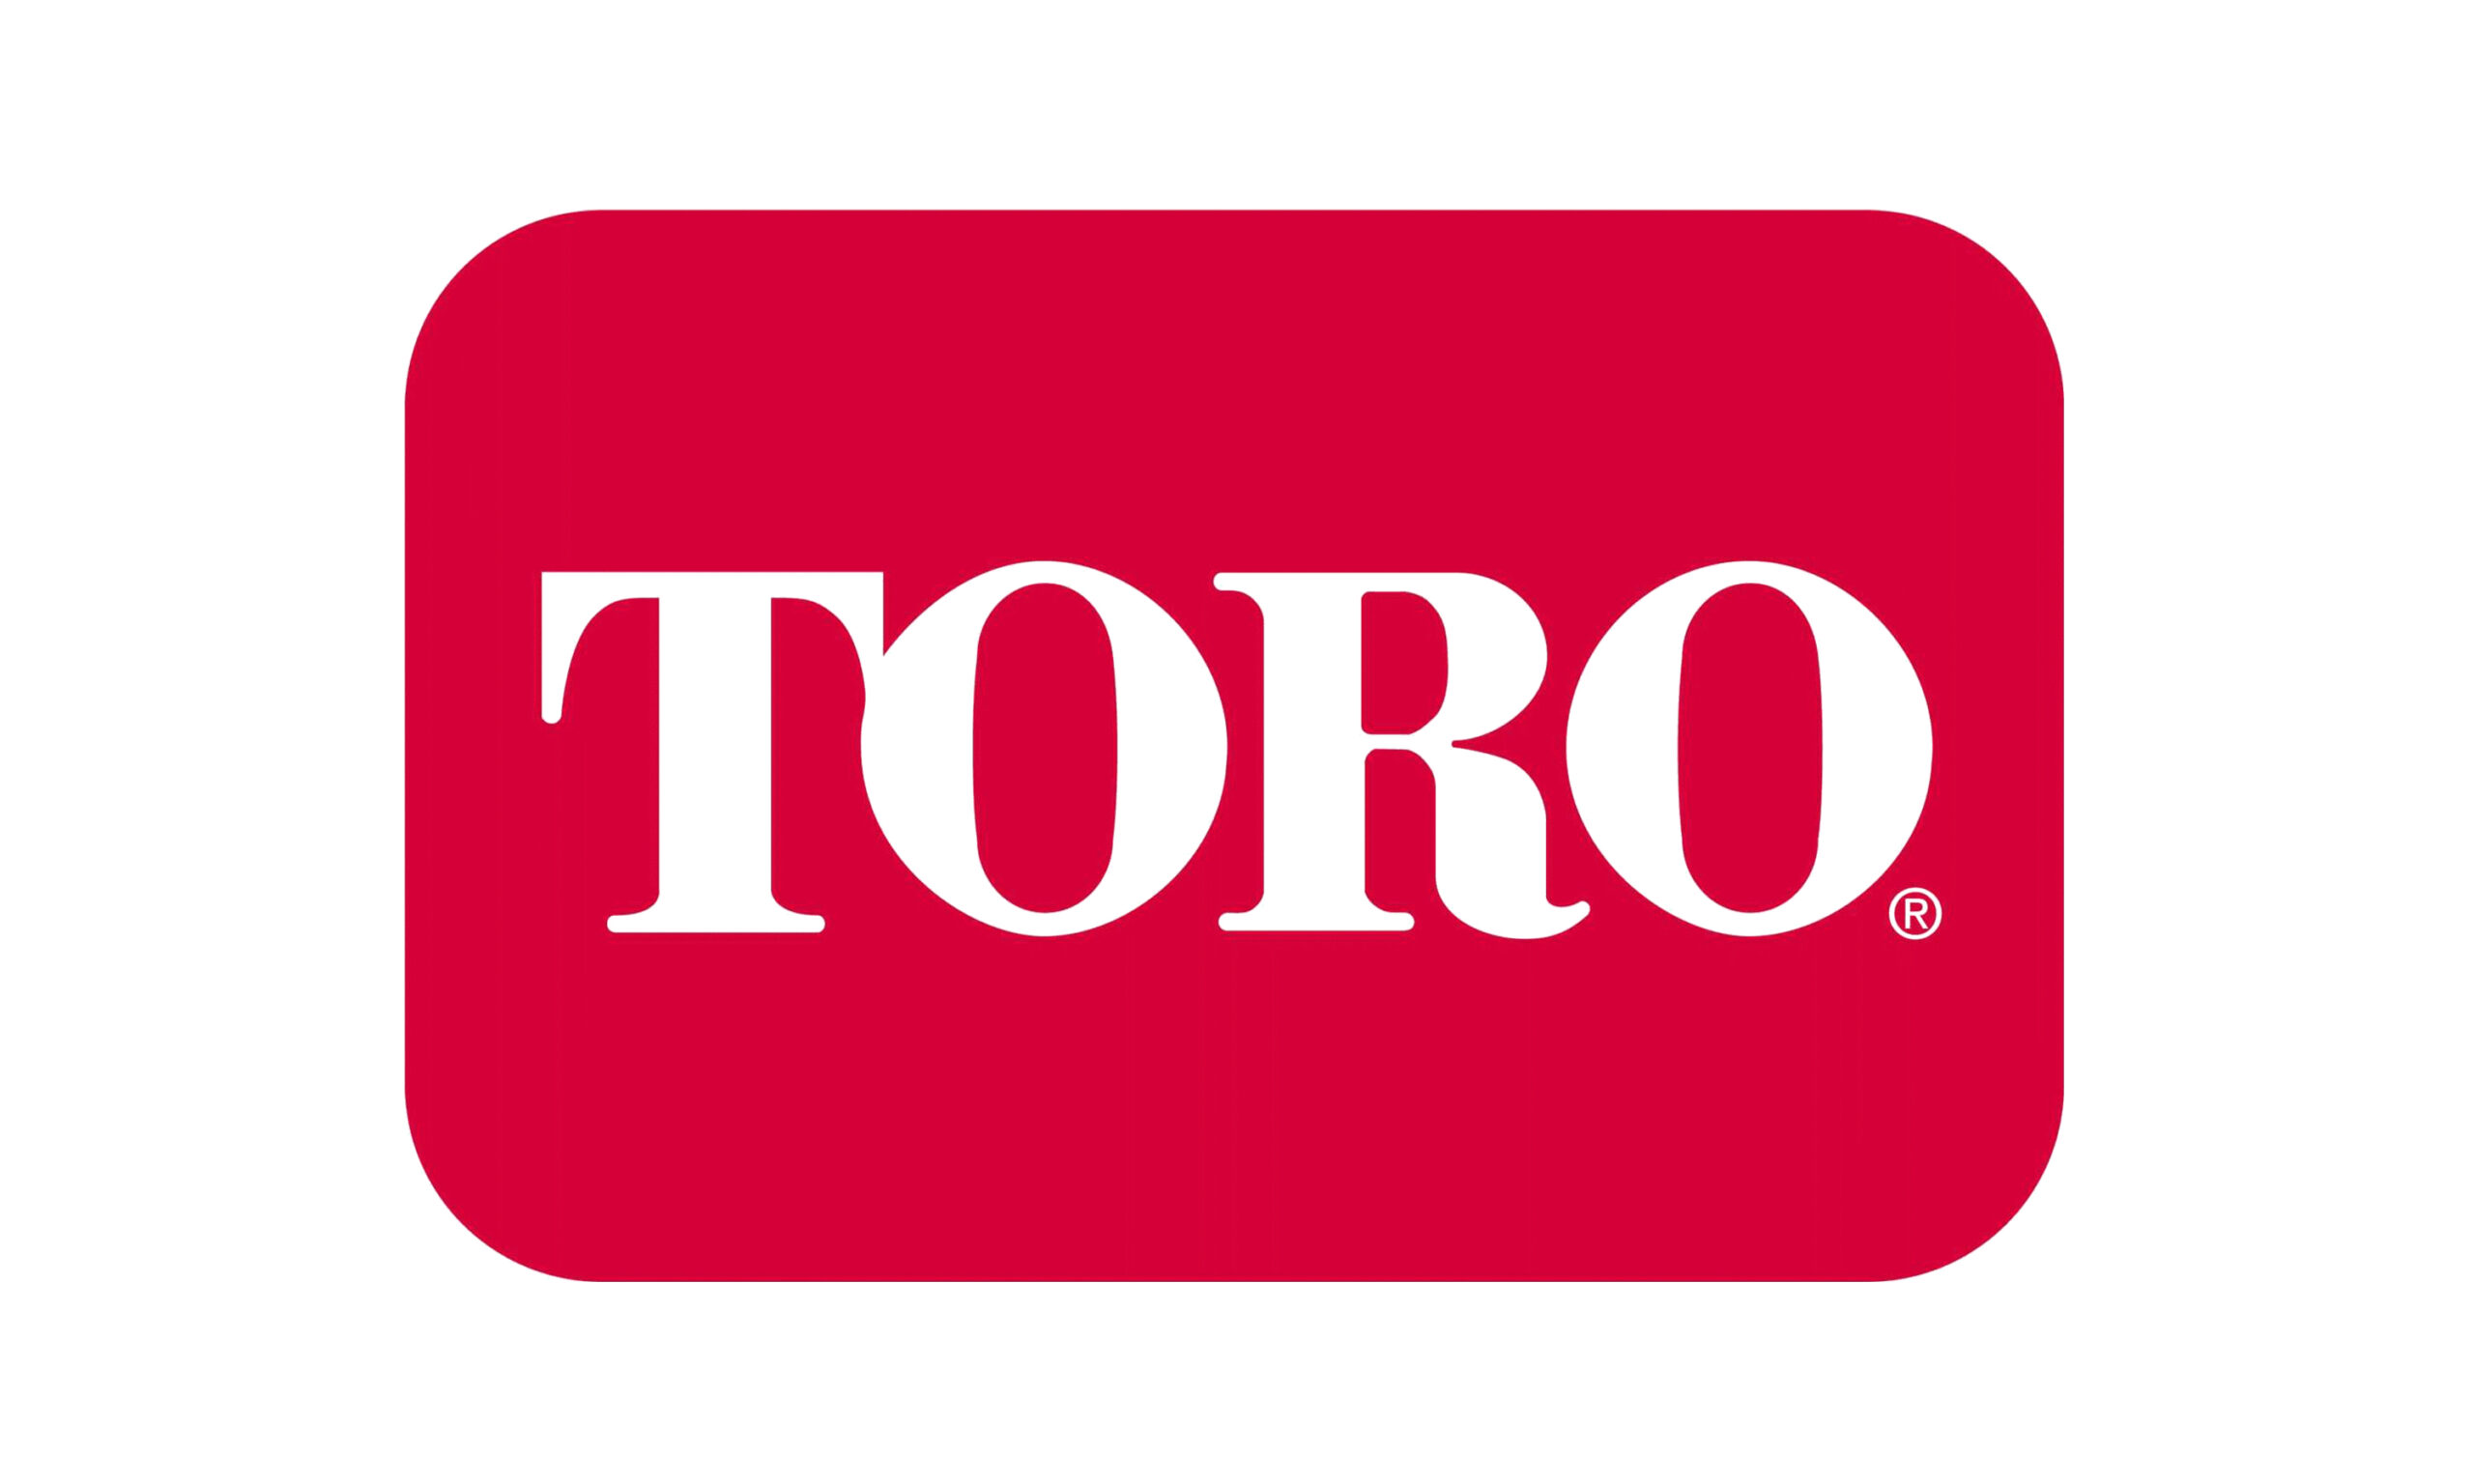 TORO logo